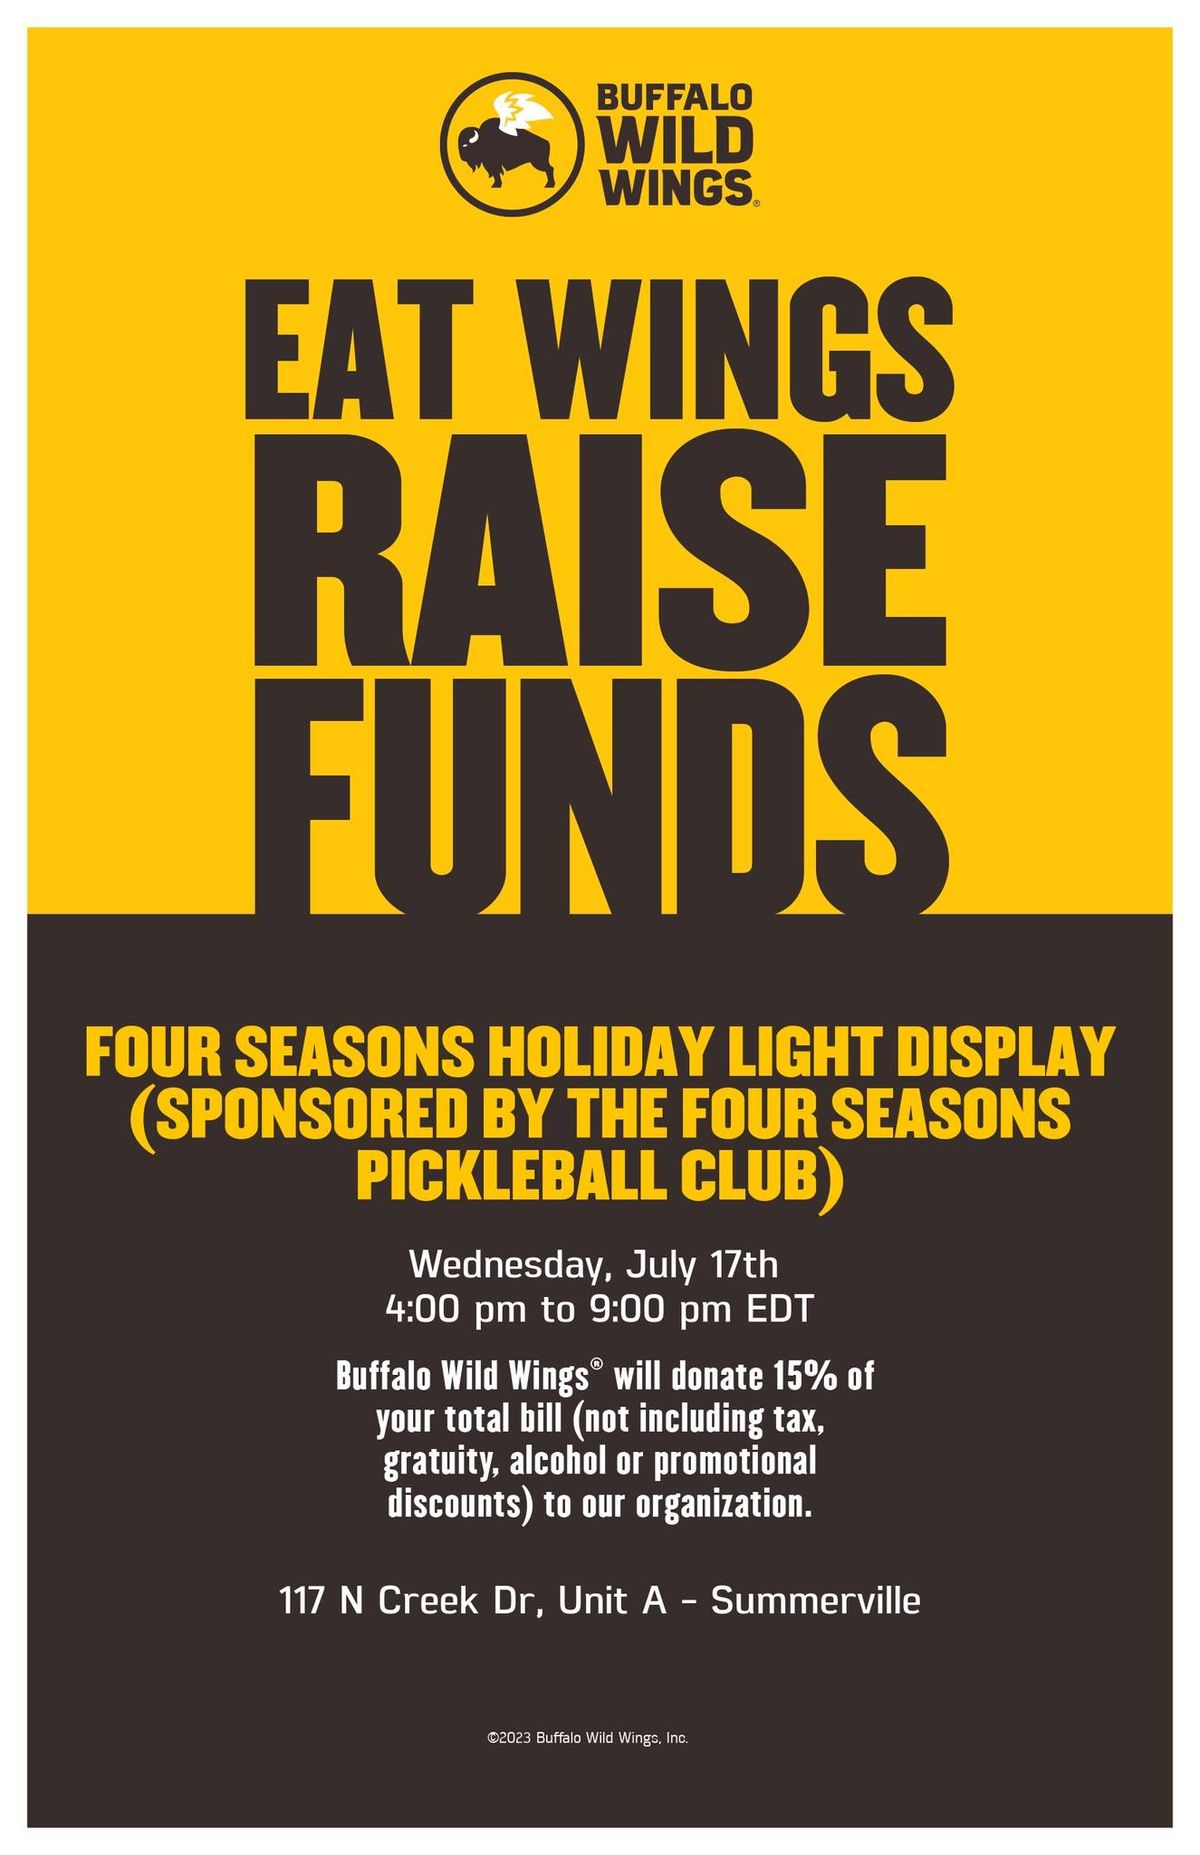 FS Holiday Light Display Fundraiser at Buffalo Wild Wings